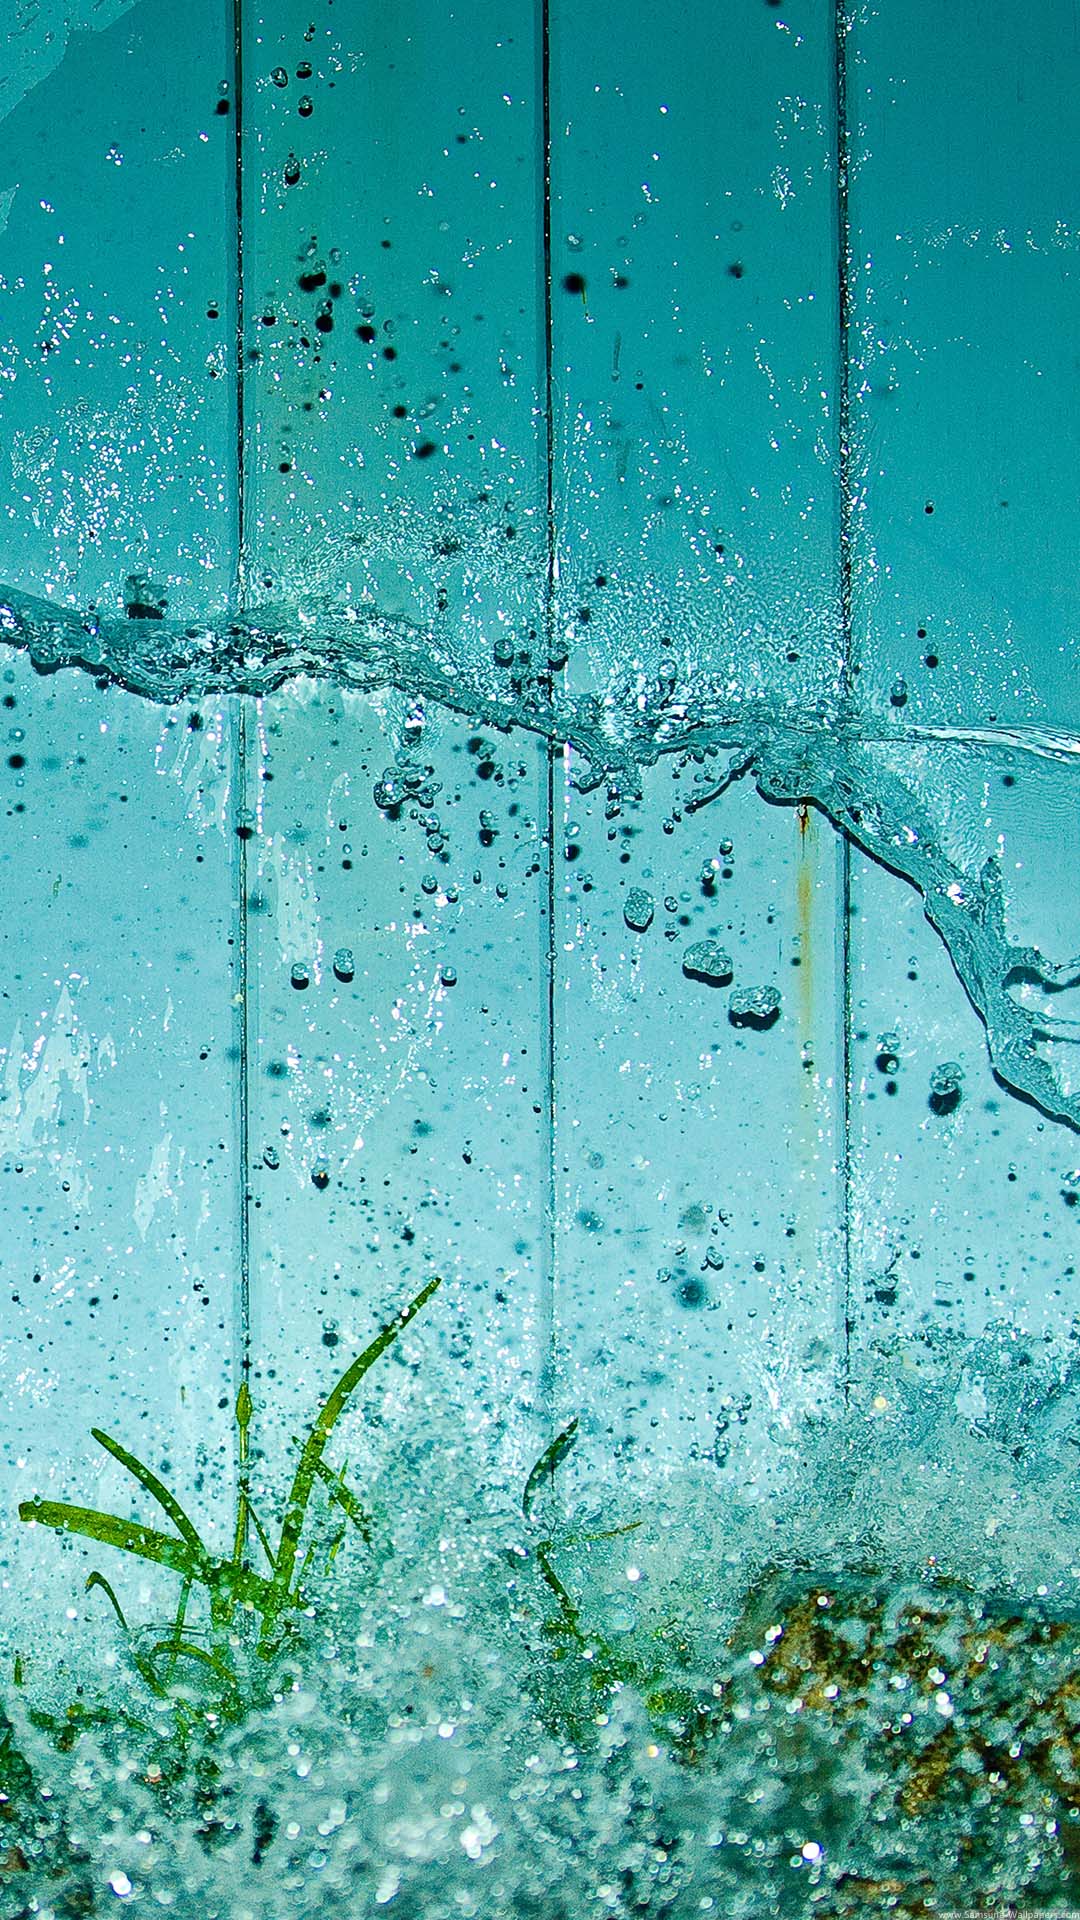 water wallpaper hd iphone,water,green,aqua,turquoise,blue